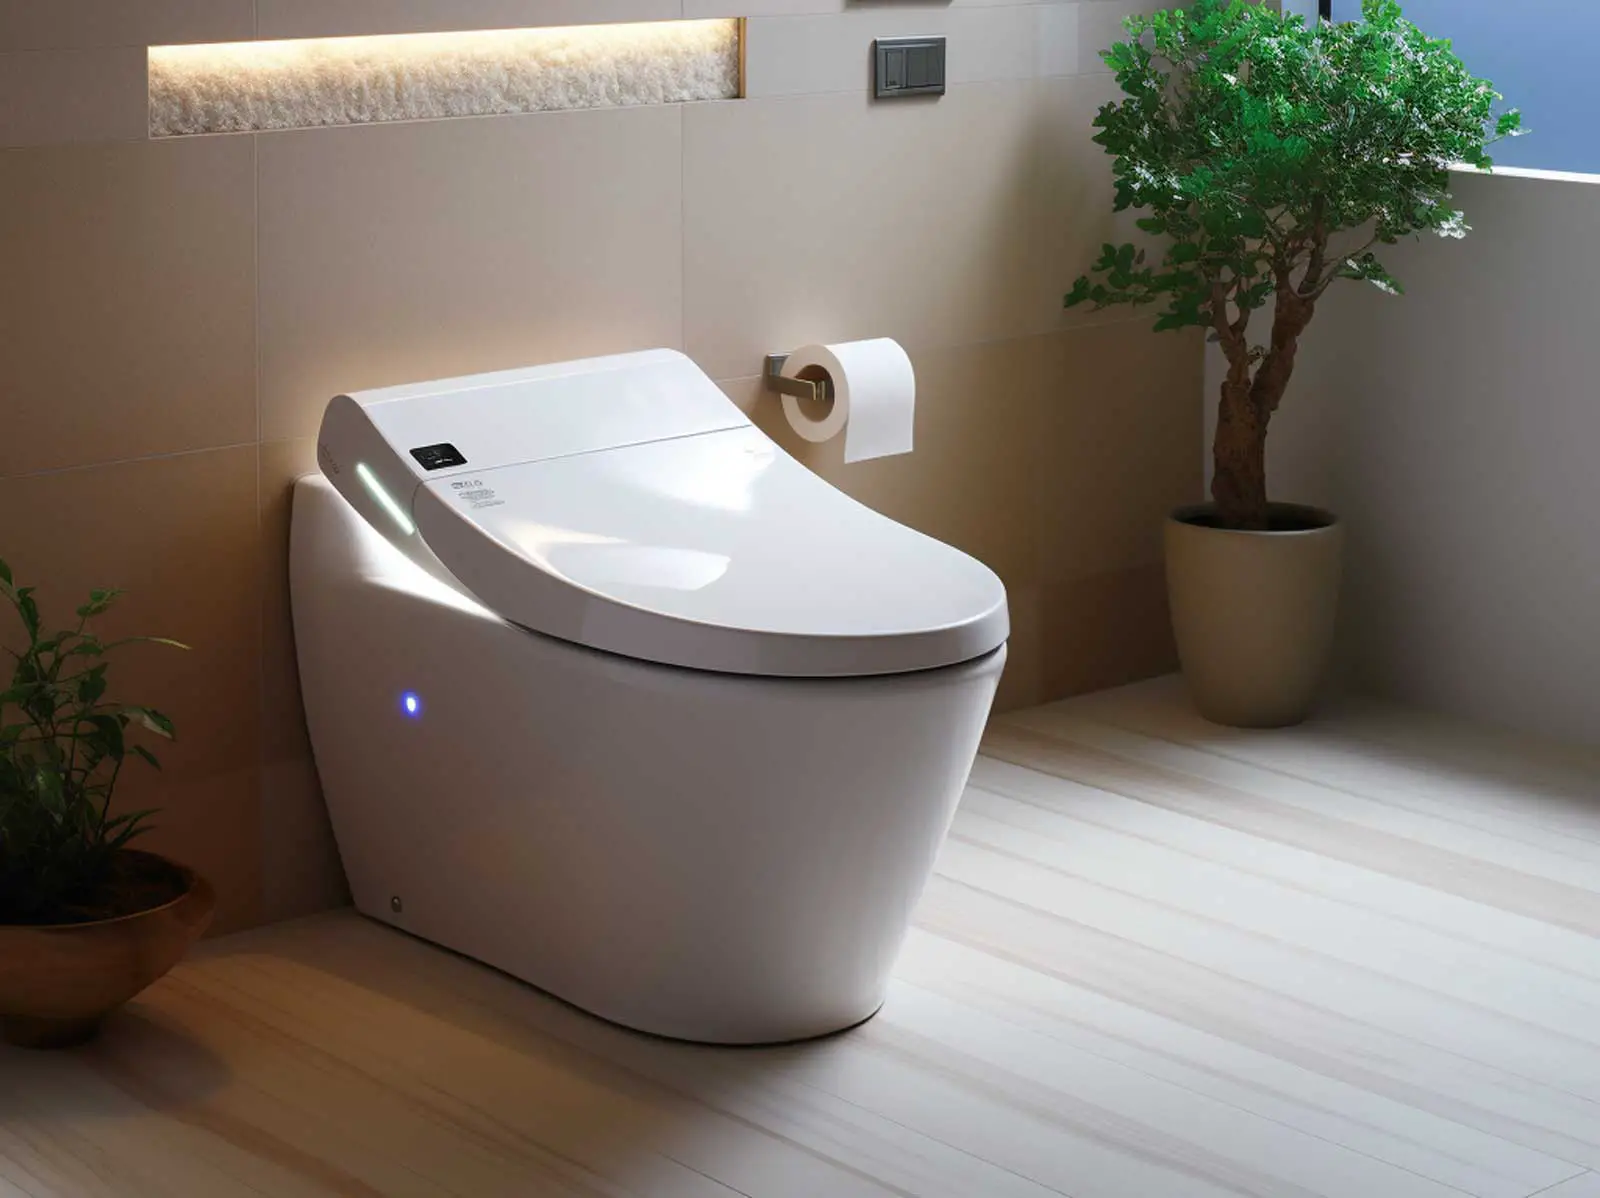 BOKU Bidet: Your New Japanese Toilet Experience 